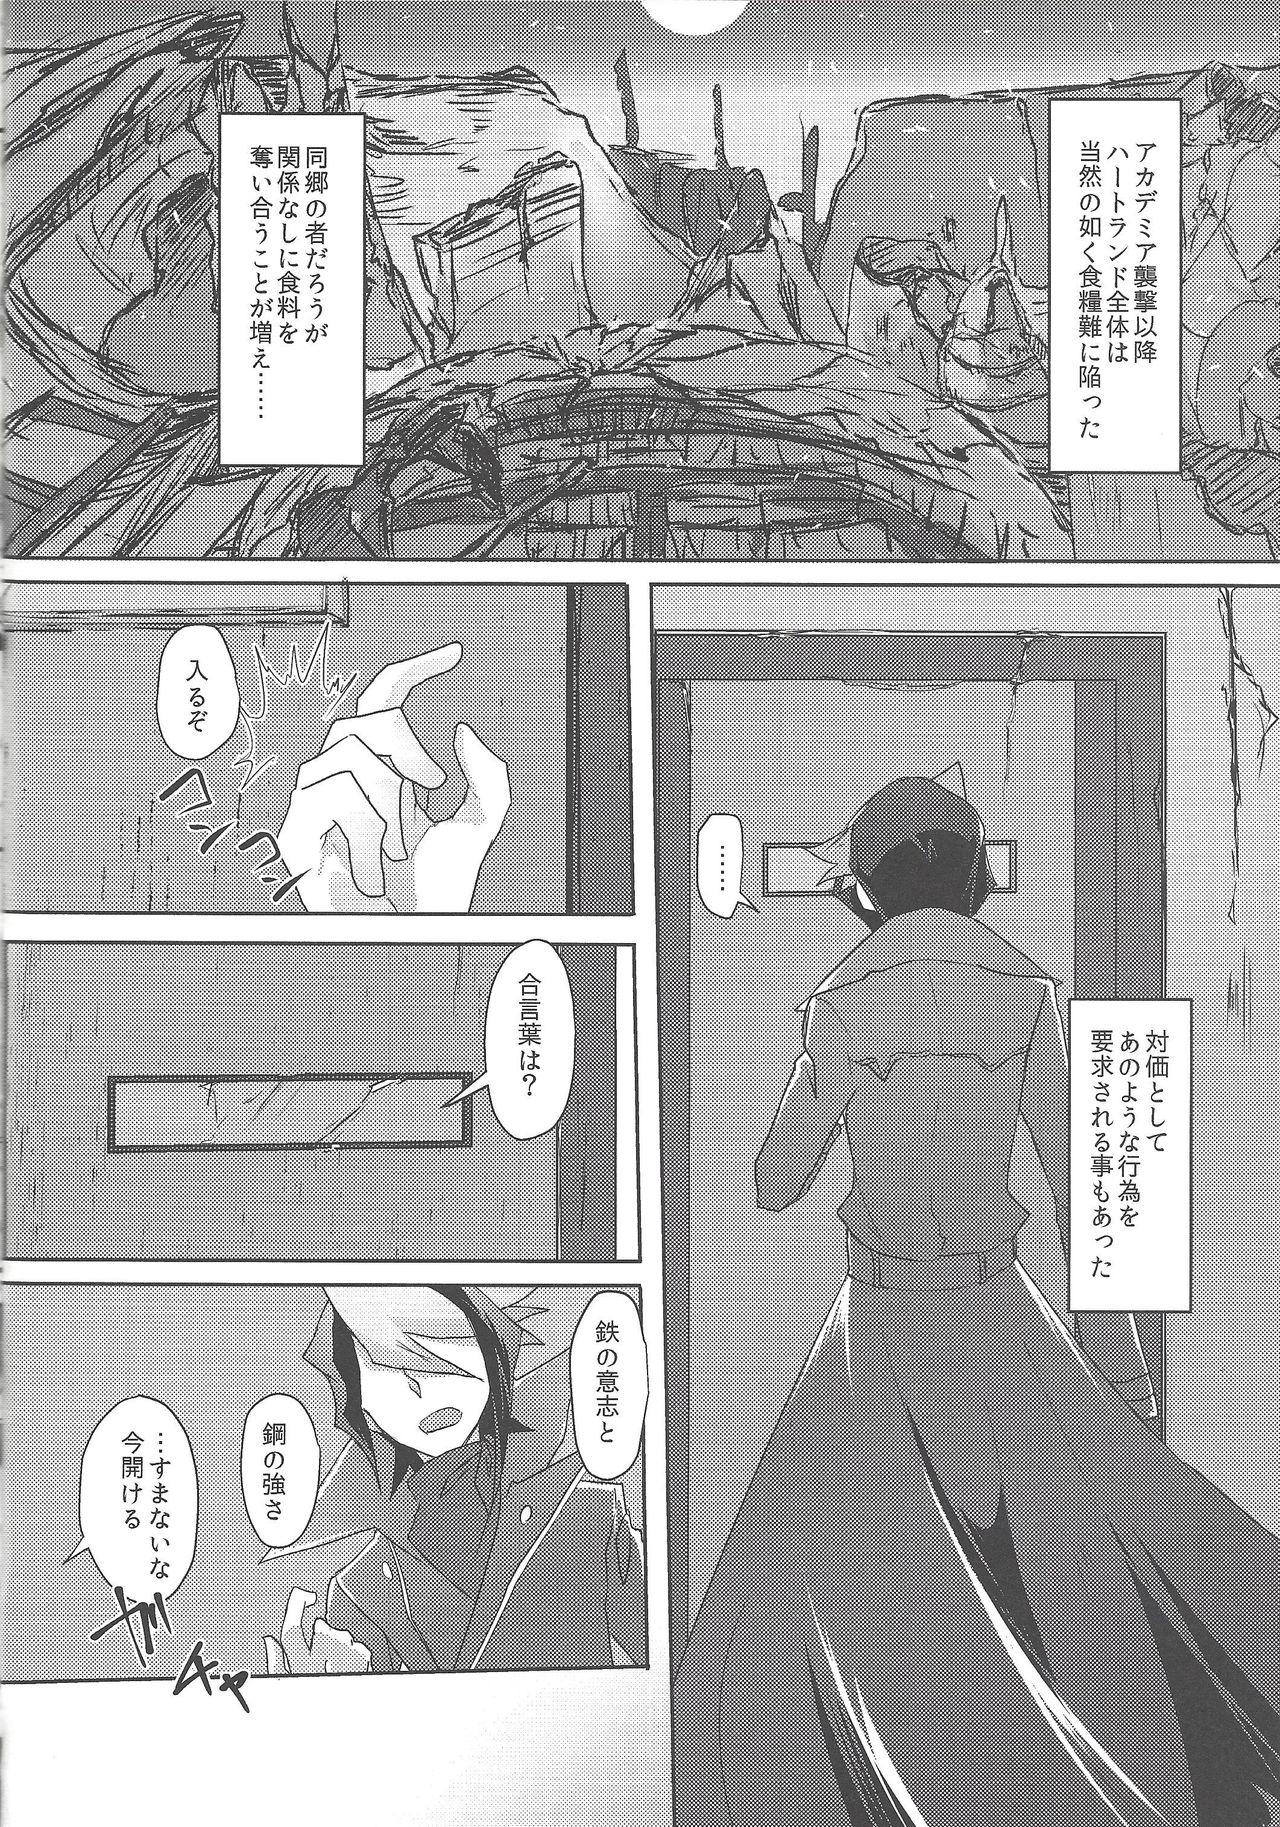 Negra Kimi to kokoro no risōkyō - Yu-gi-oh arc-v Flogging - Page 5